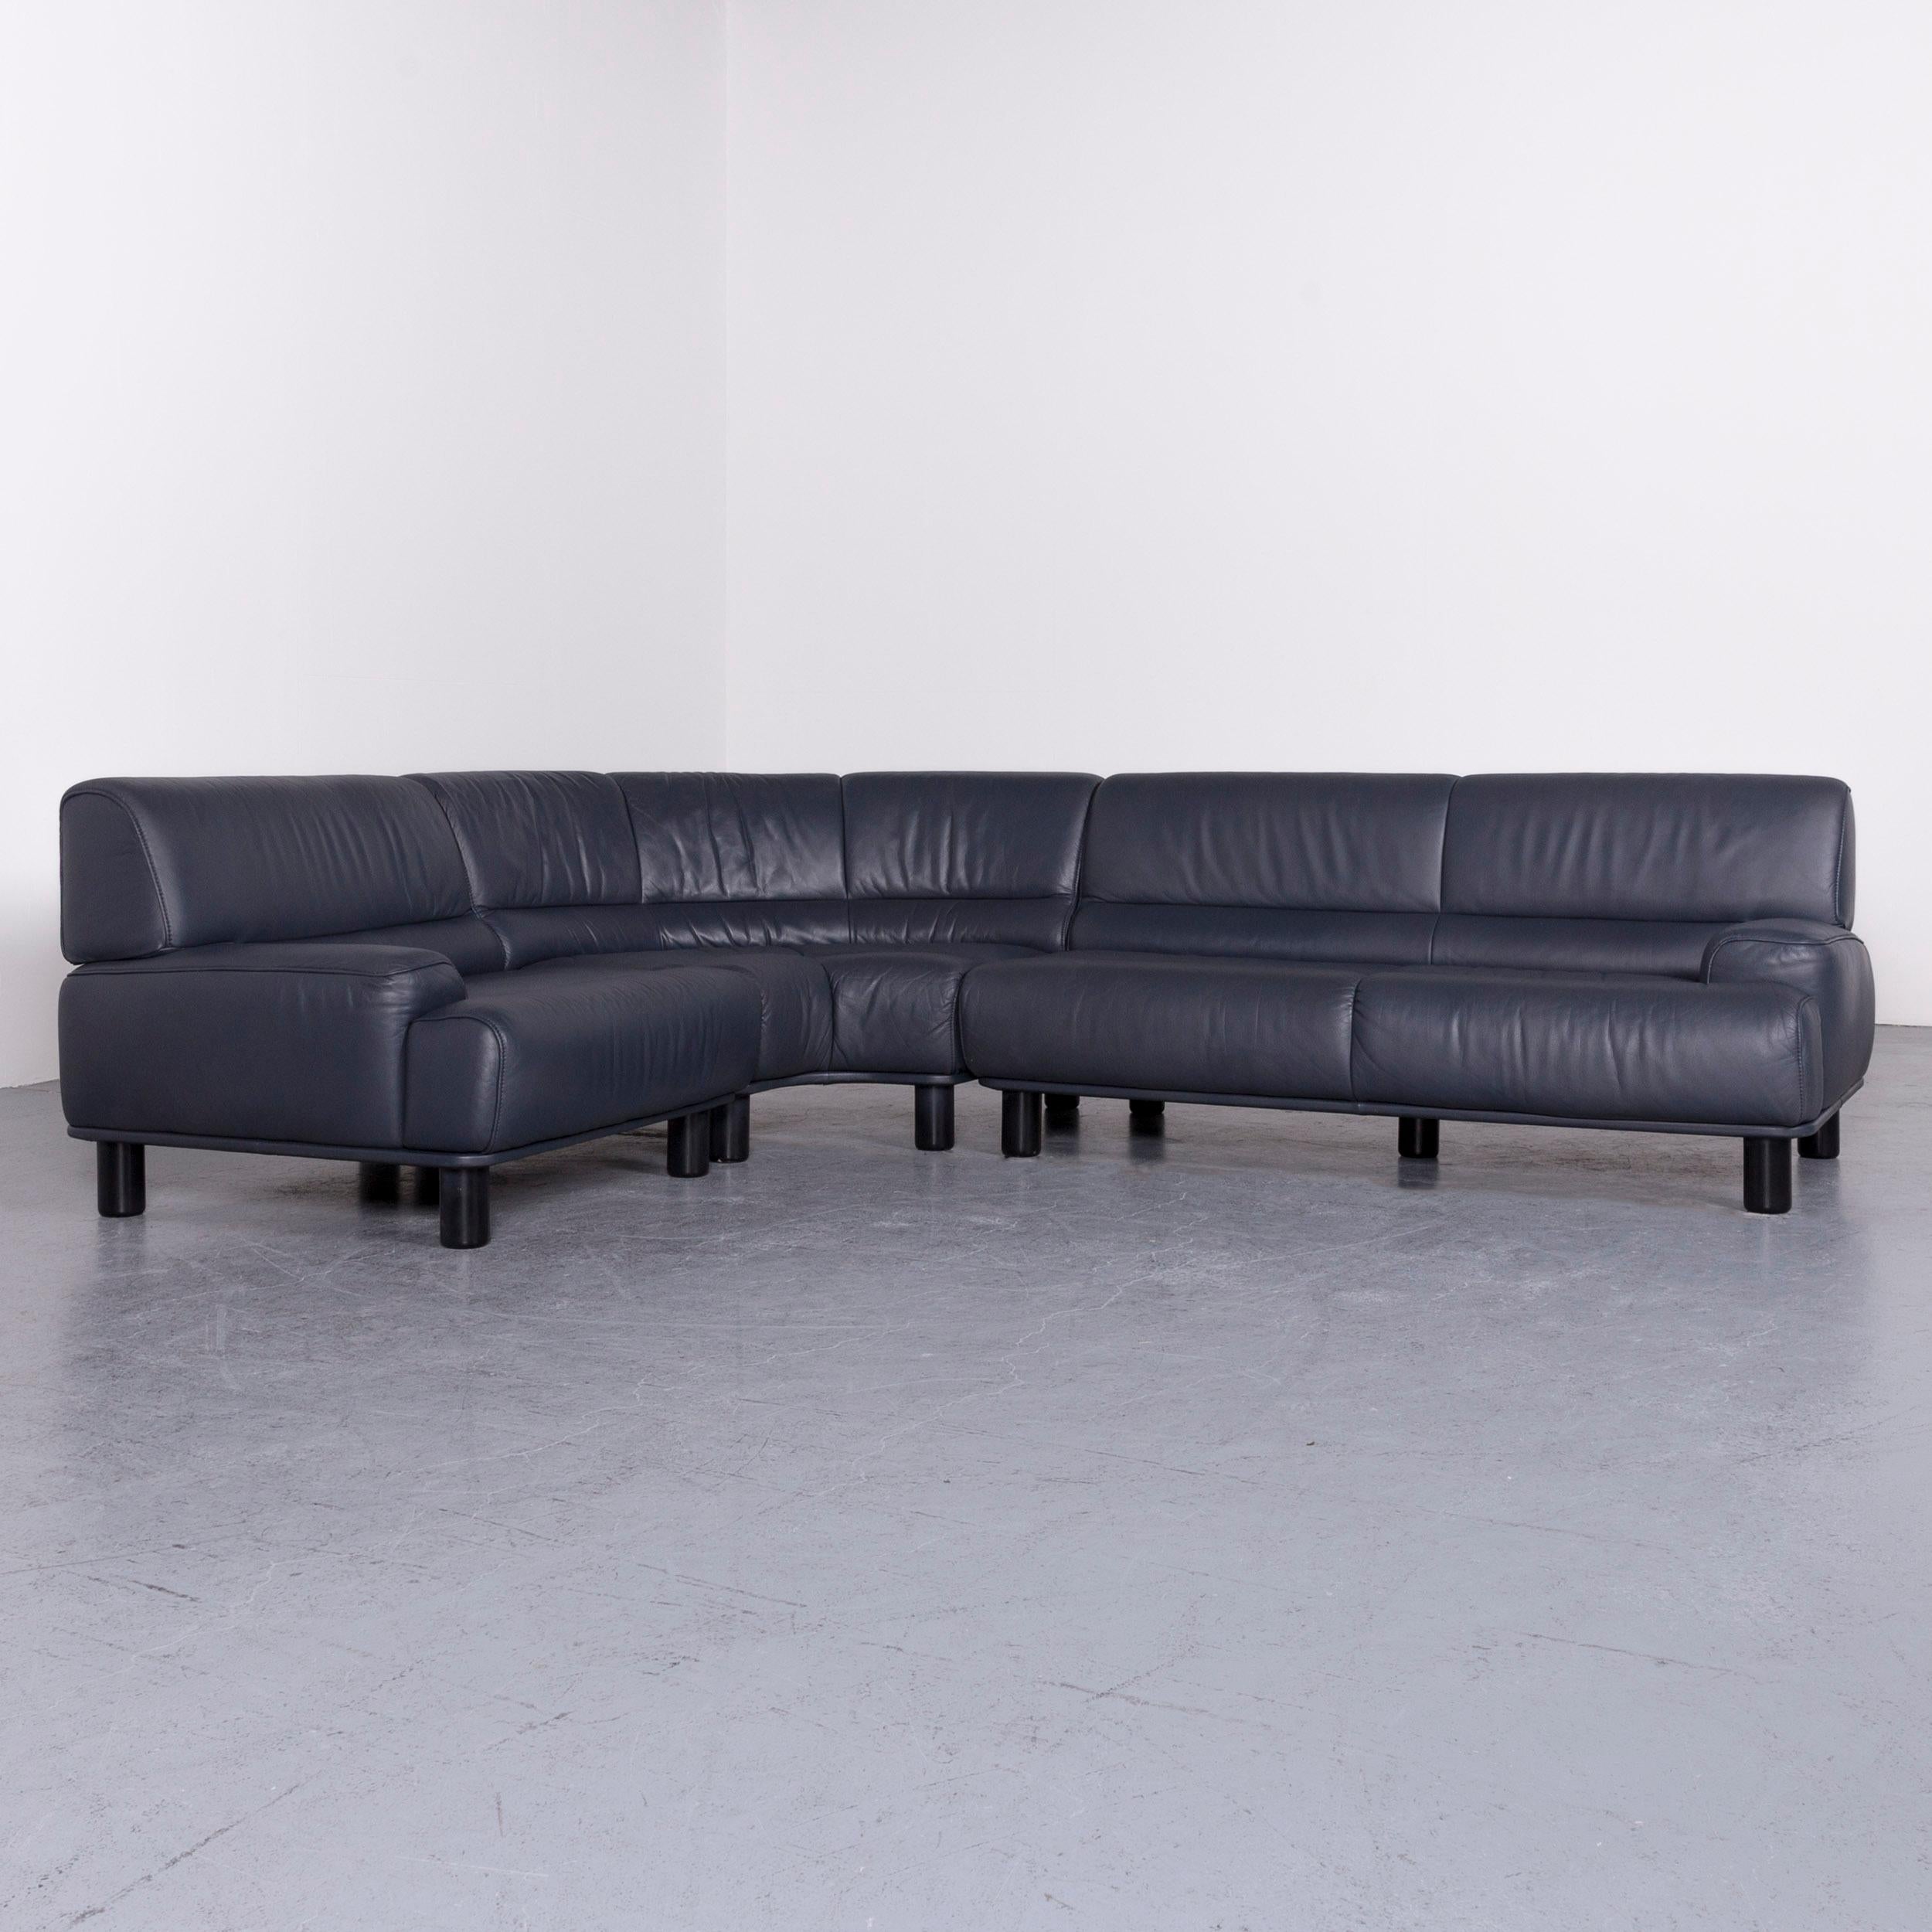 Swiss De Sede DS 18 Designer Leather Corner Couch Sofa